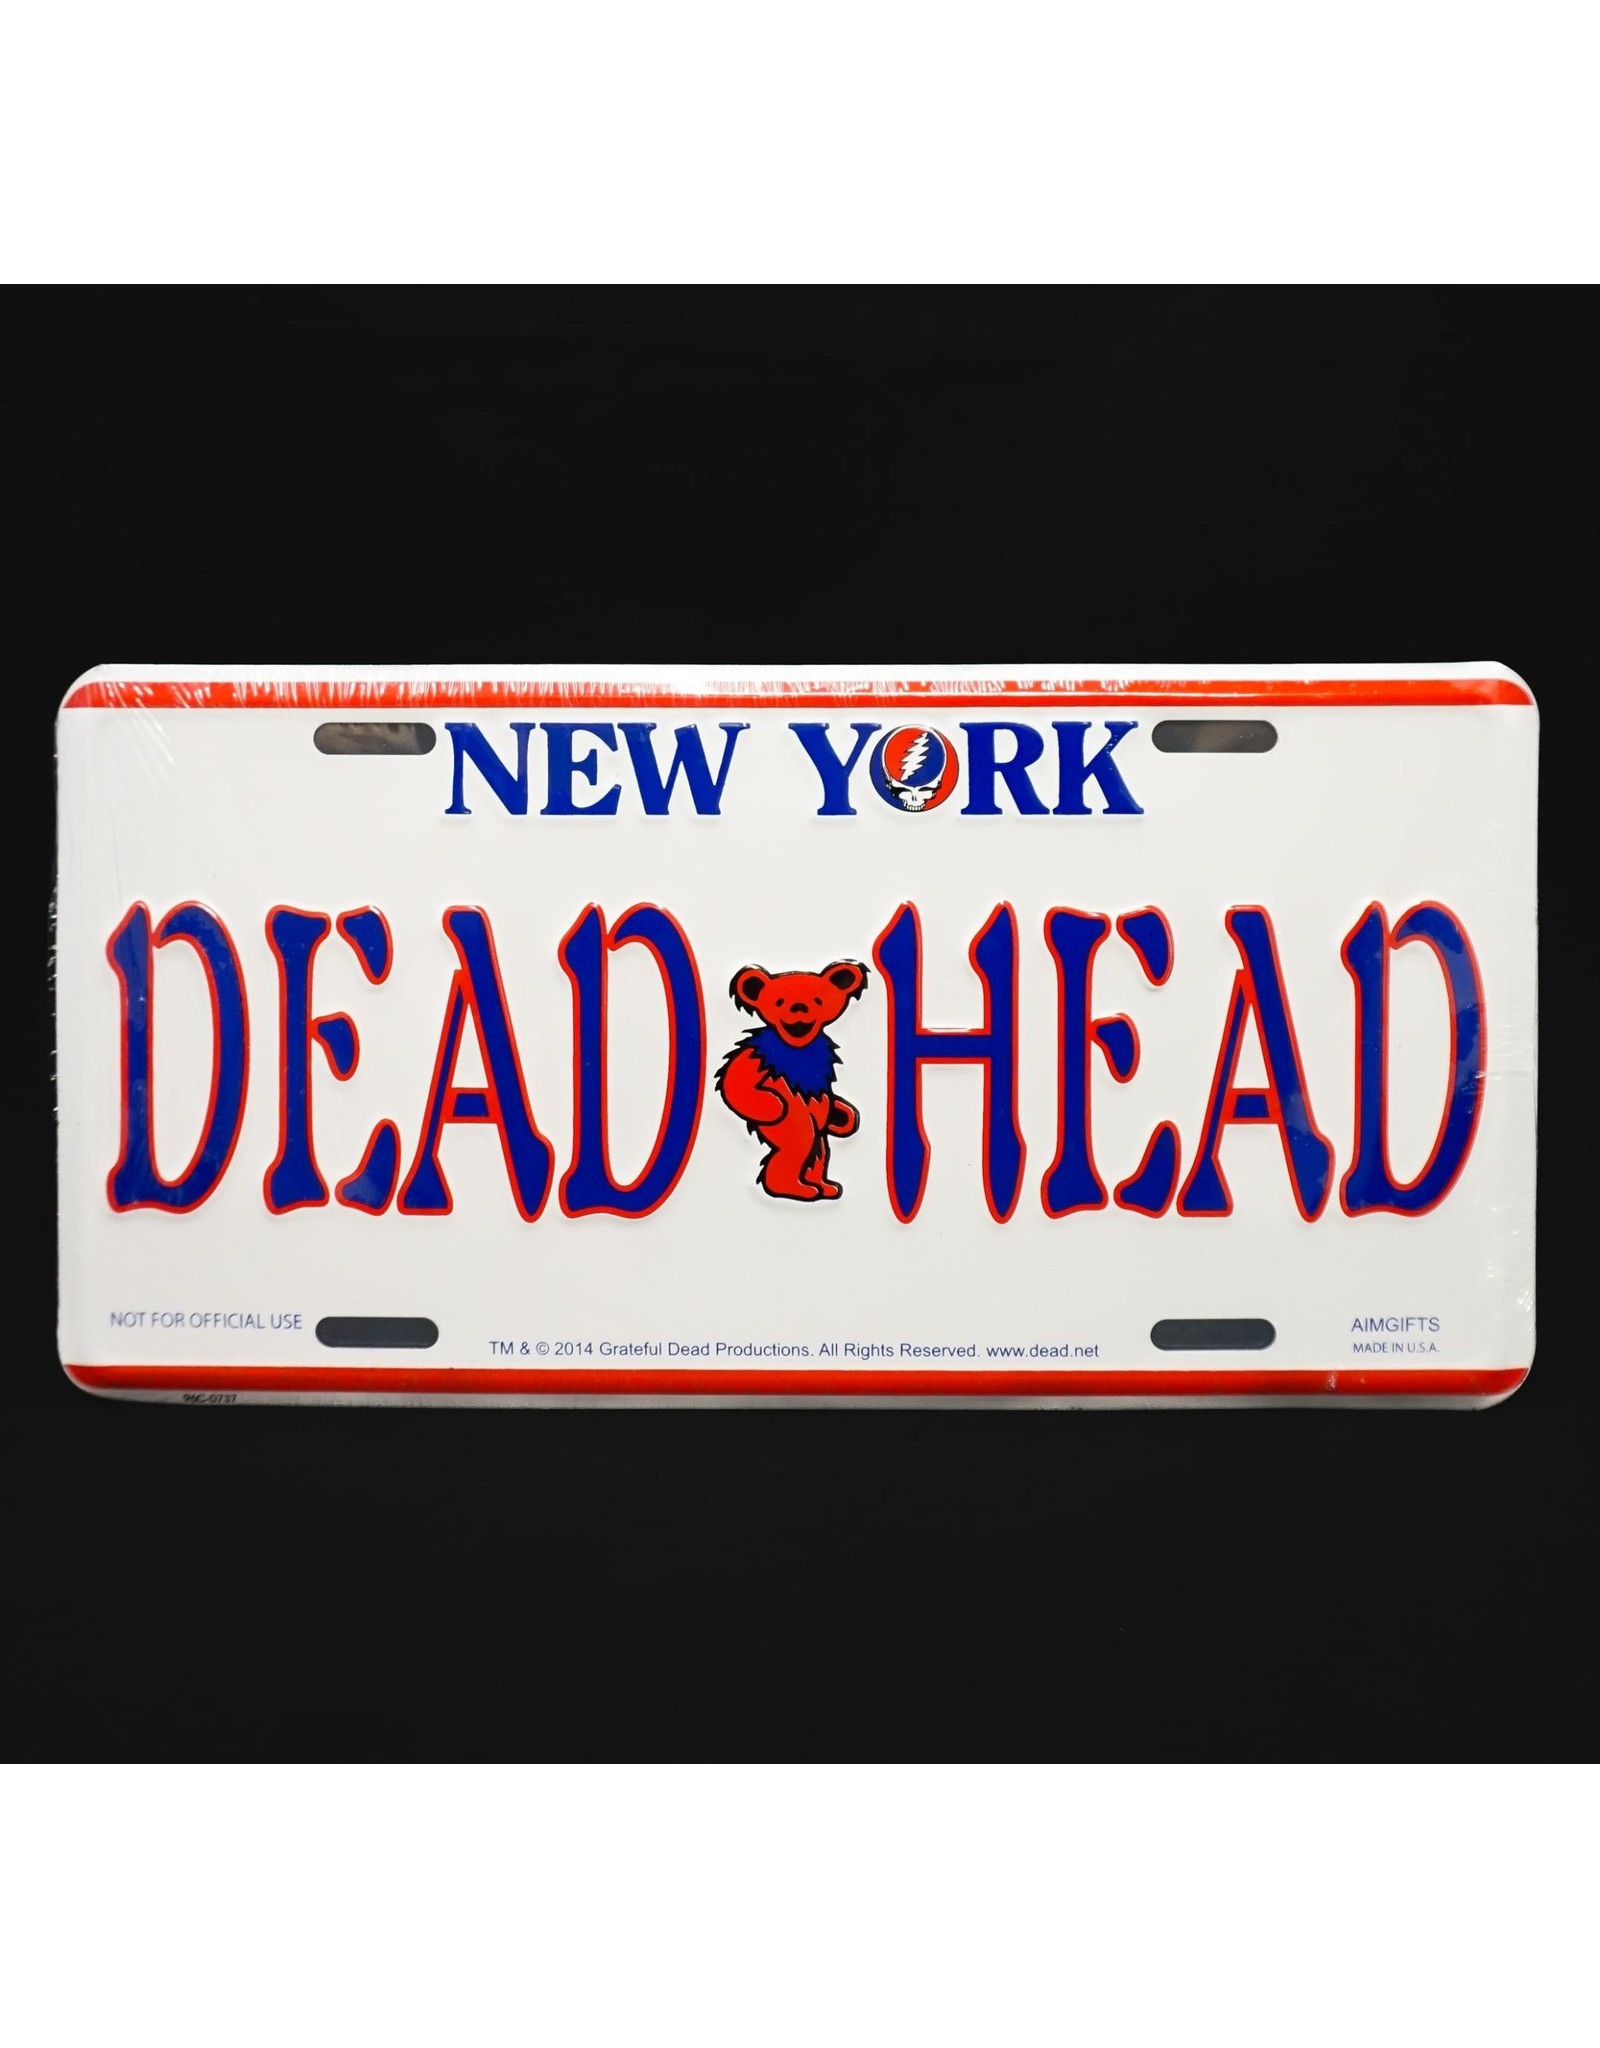 License Plate - New York Dead Head